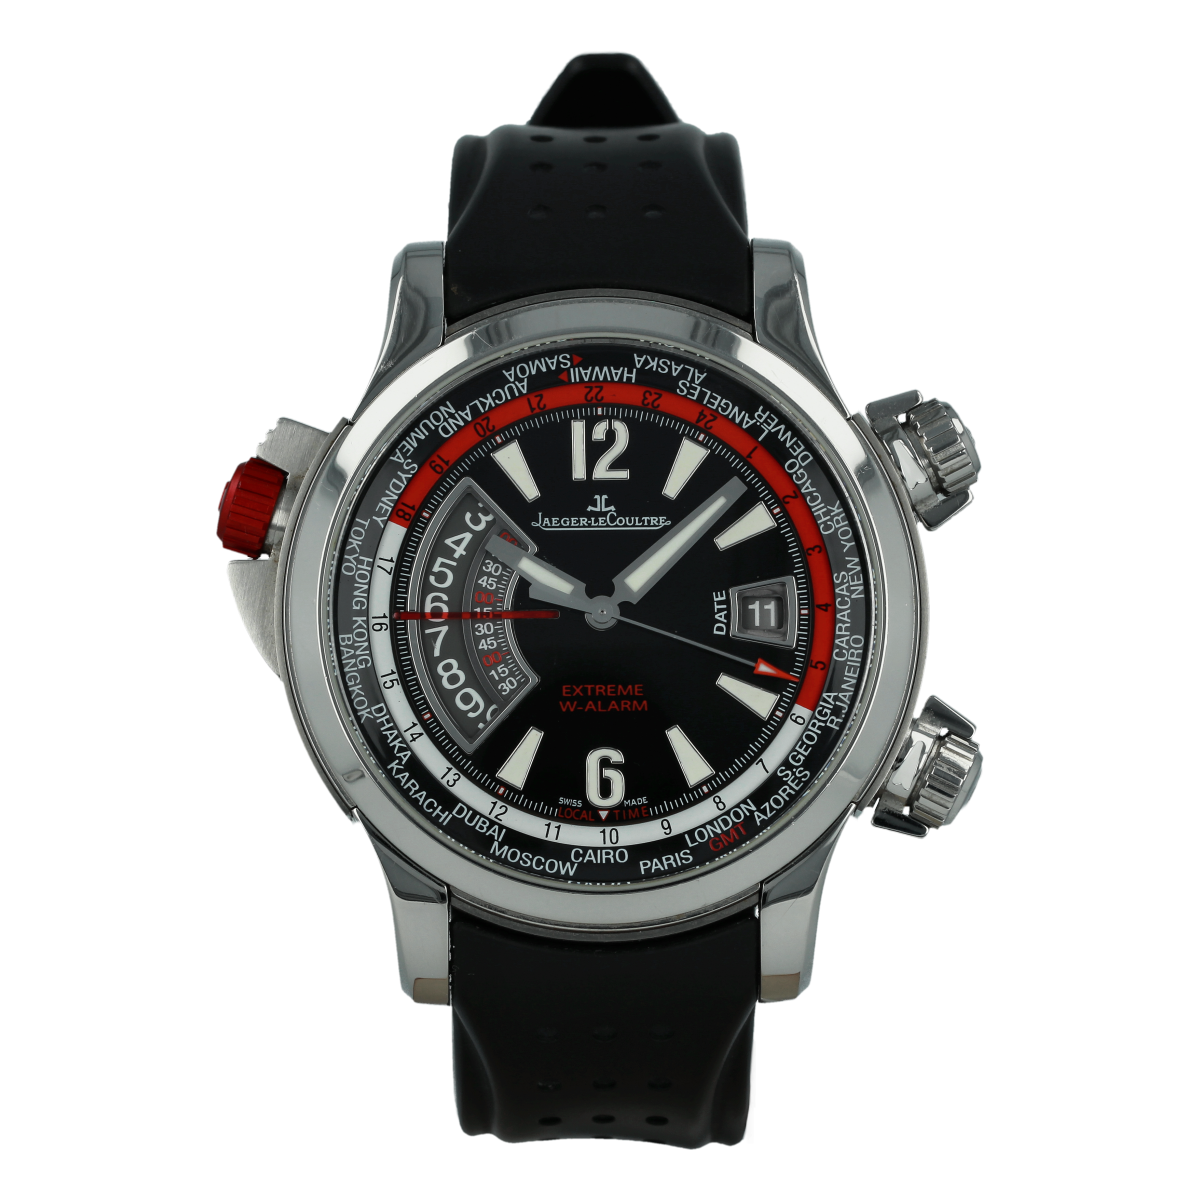 Jaeger-LeCoultre Master Compressor Extreme W-Alarm *Completo* | Comprar reloj Jaeger-LeCoultre de segunda mano